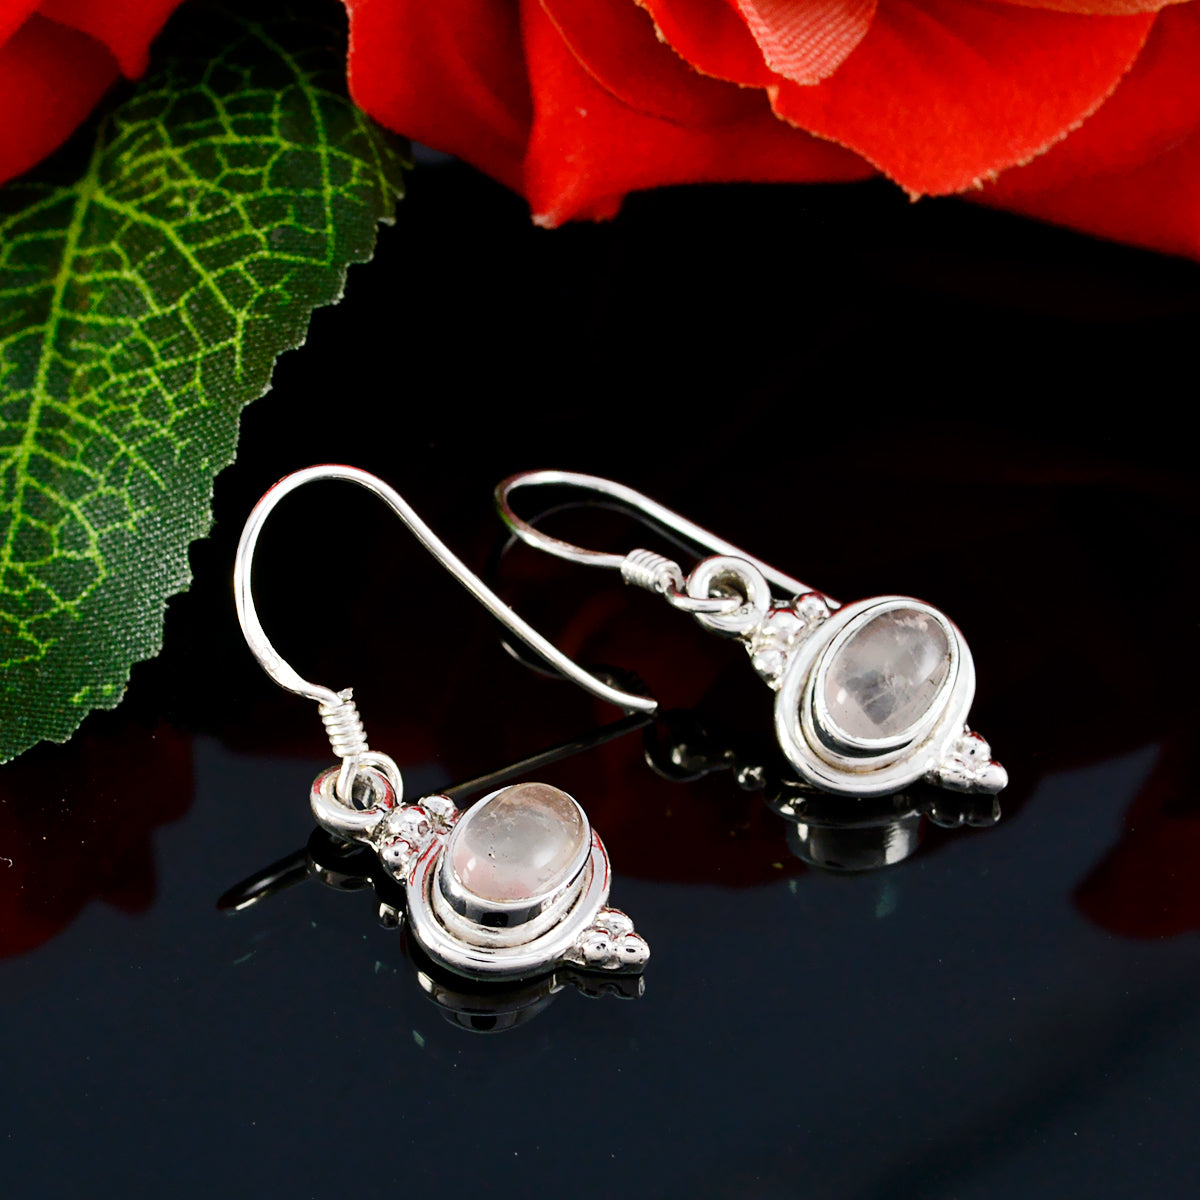 Riyo Good Gemstones oval Cabochon Pink Rose Quartz Silver Earring gift for wedding